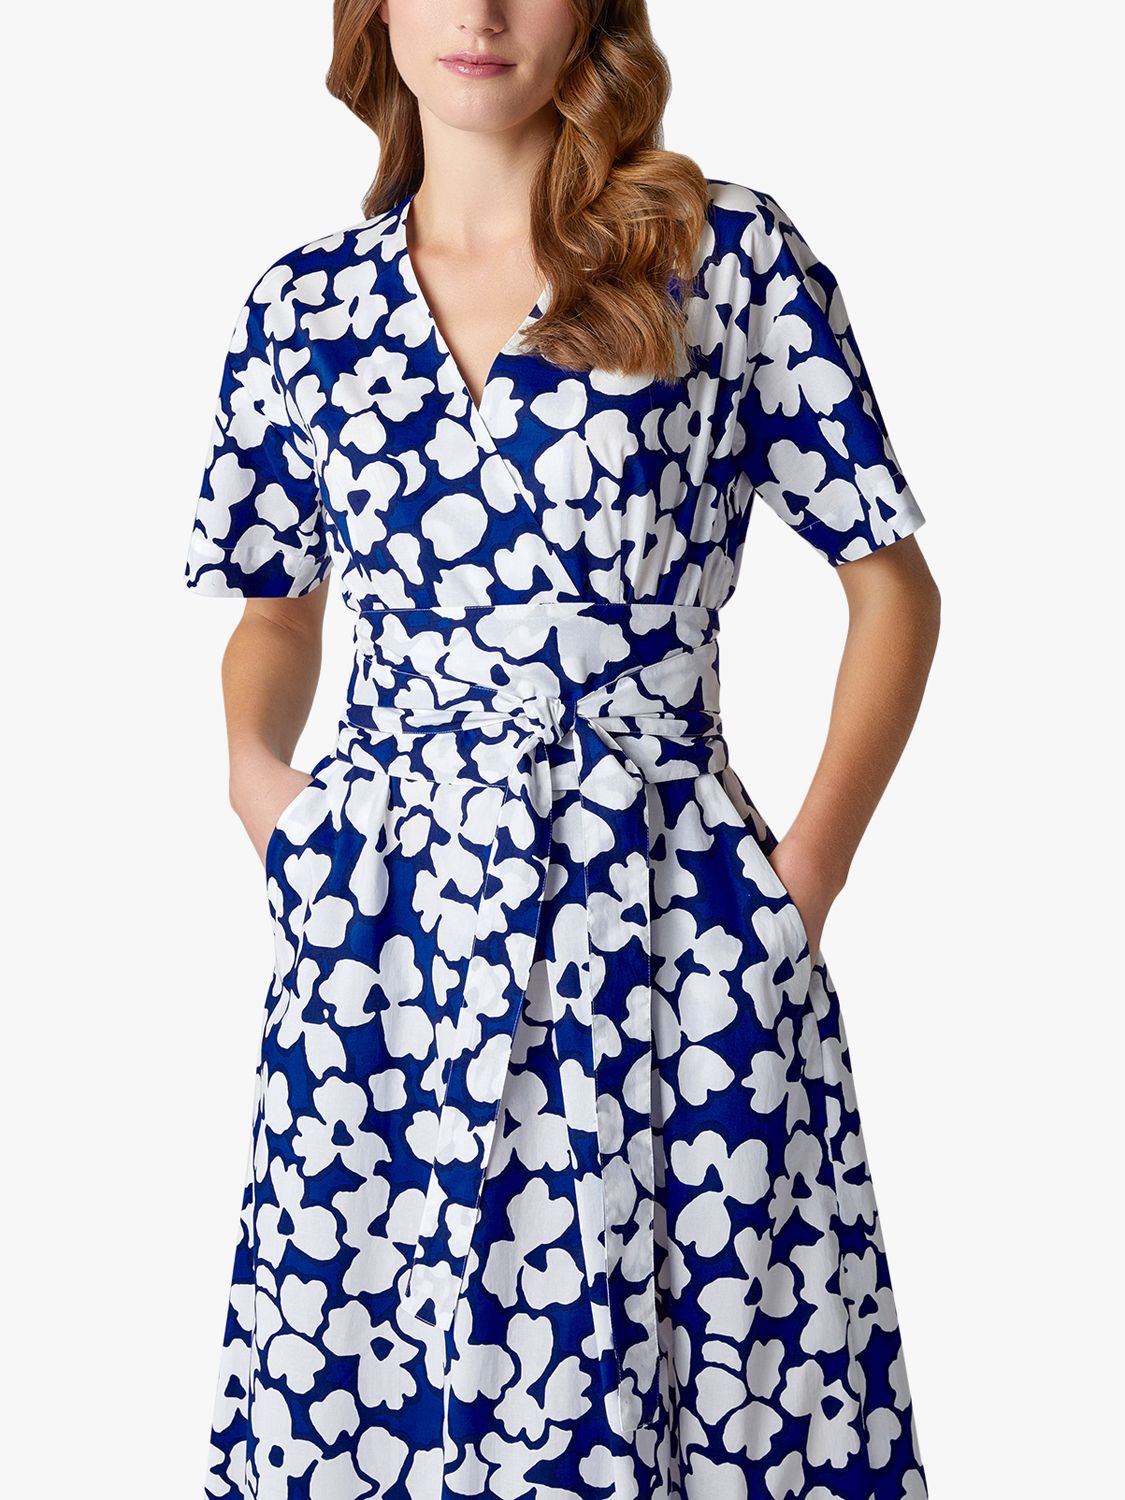 Jasper Conran London Floral Midi Wrap Dress, Blue, 8